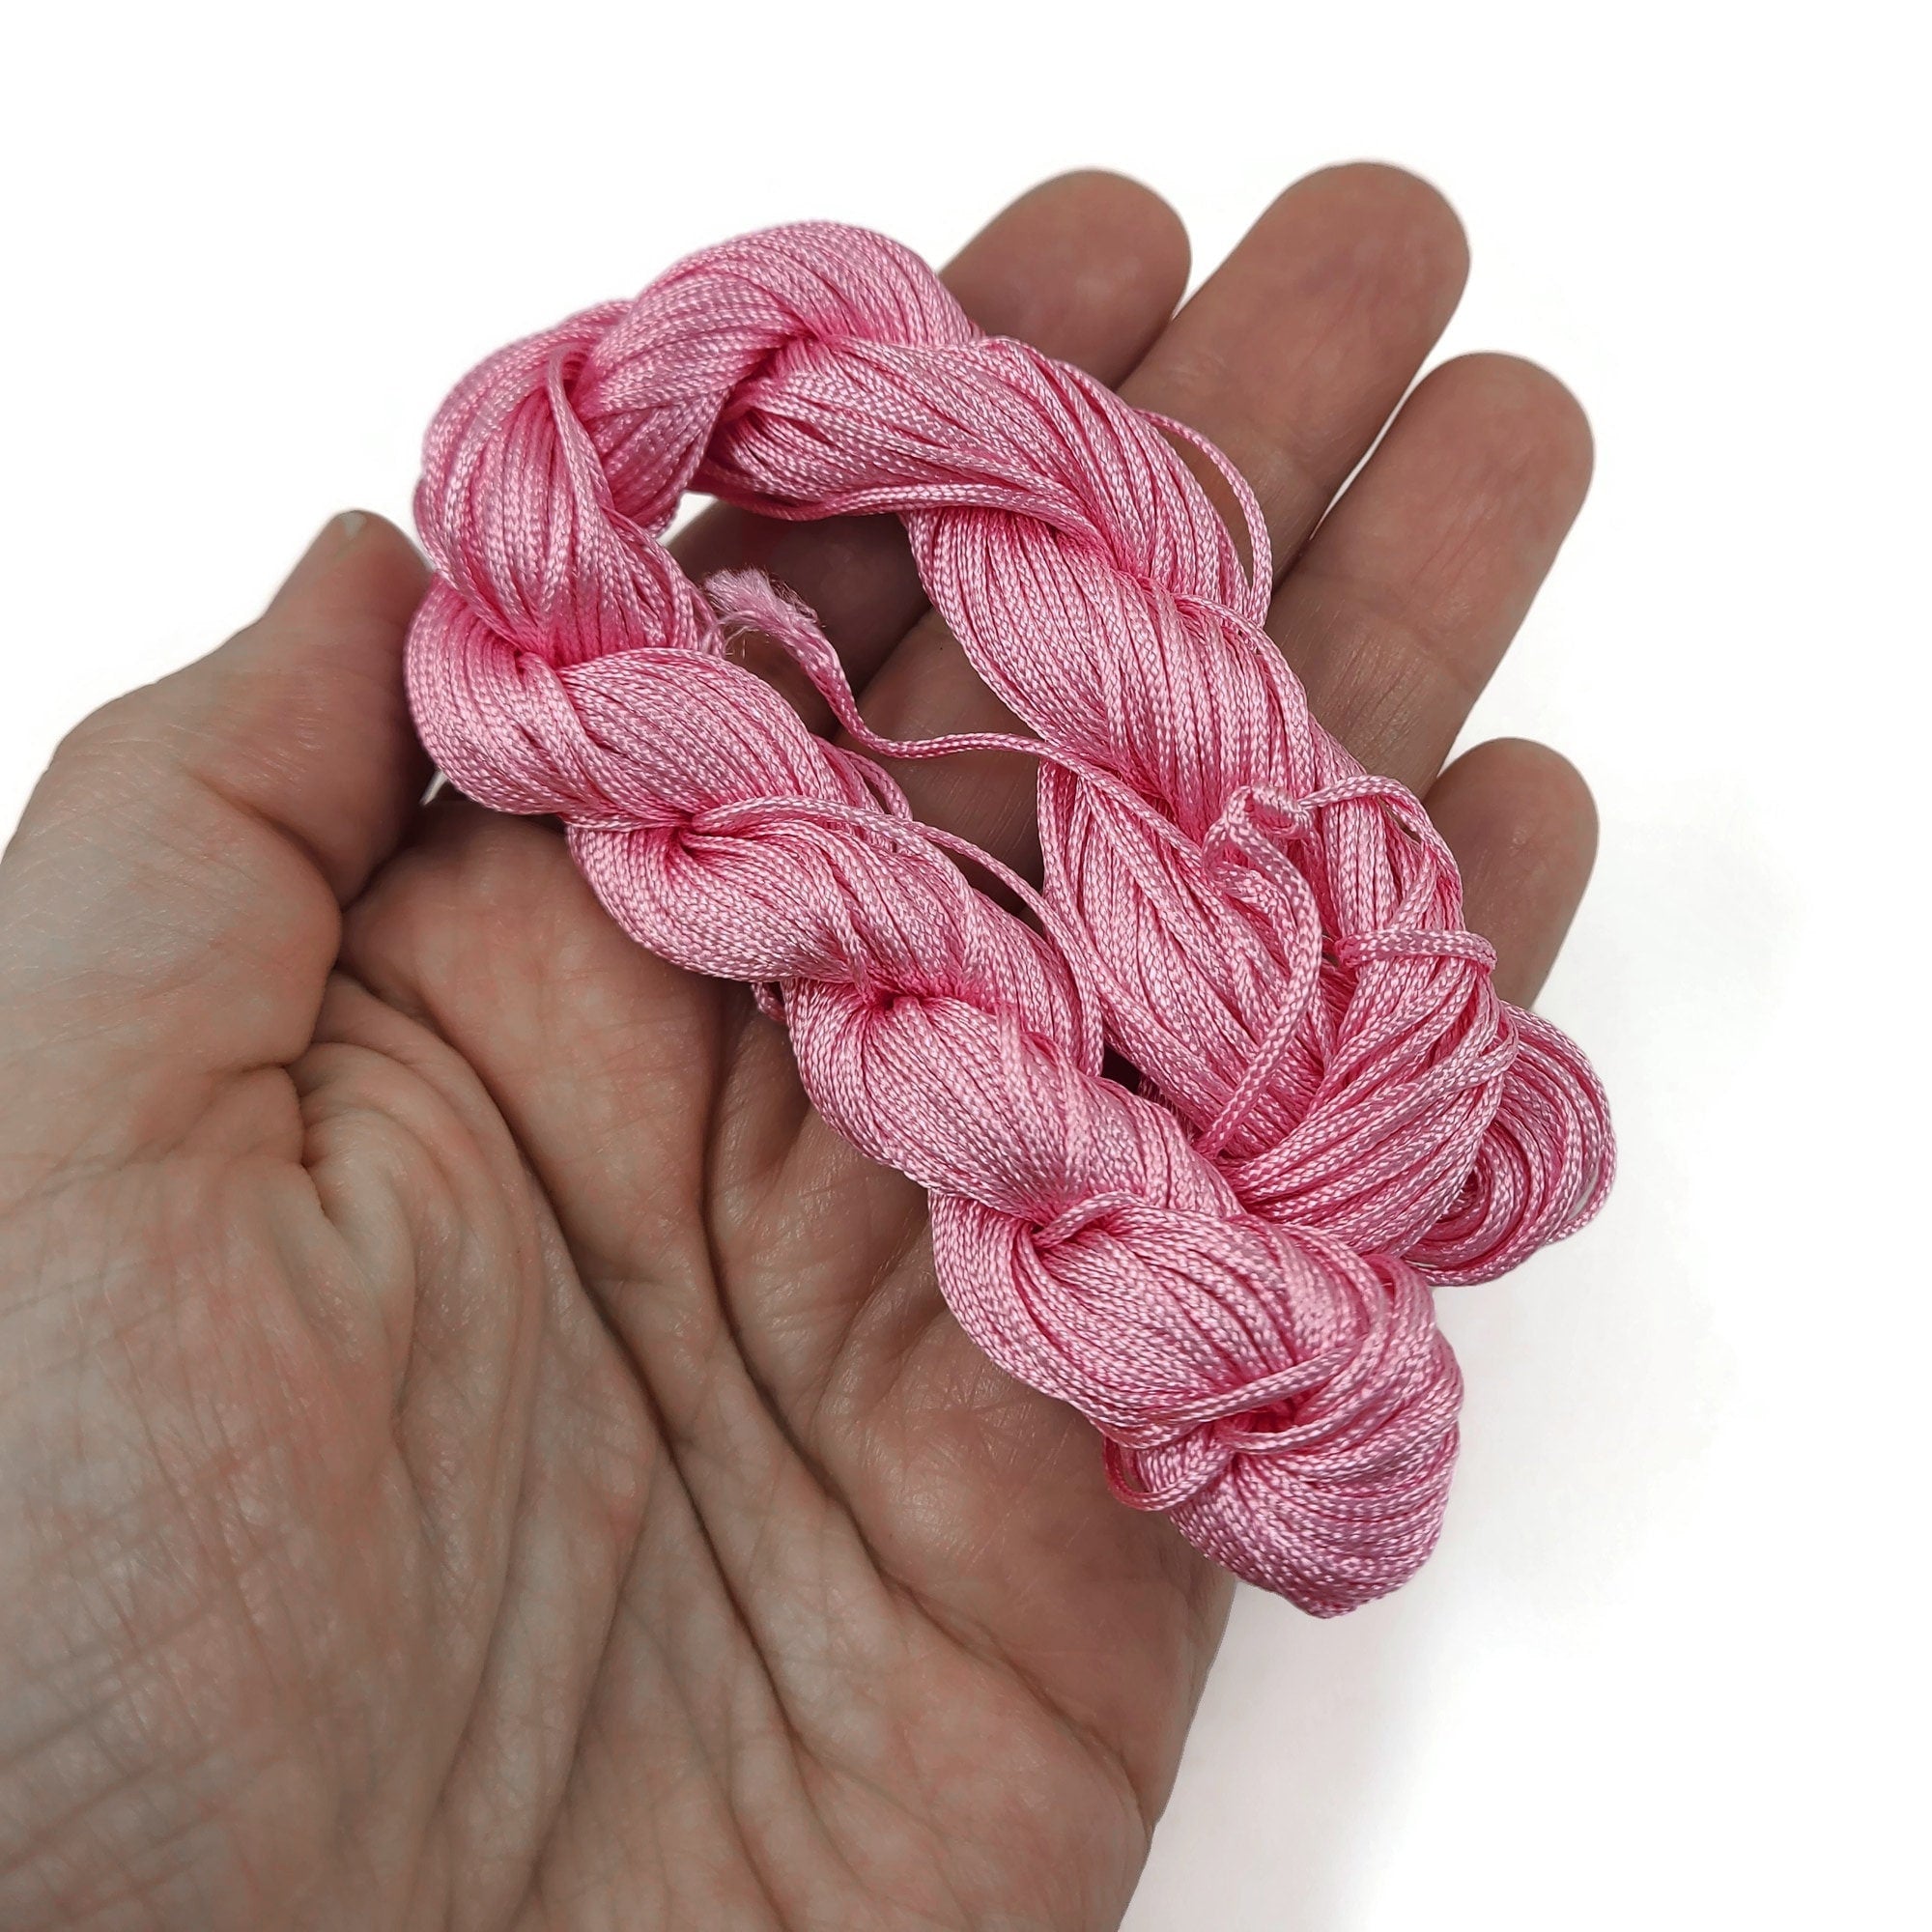 1mm nylon cord, Knotting string, Macrame thread, Jewelry making supply